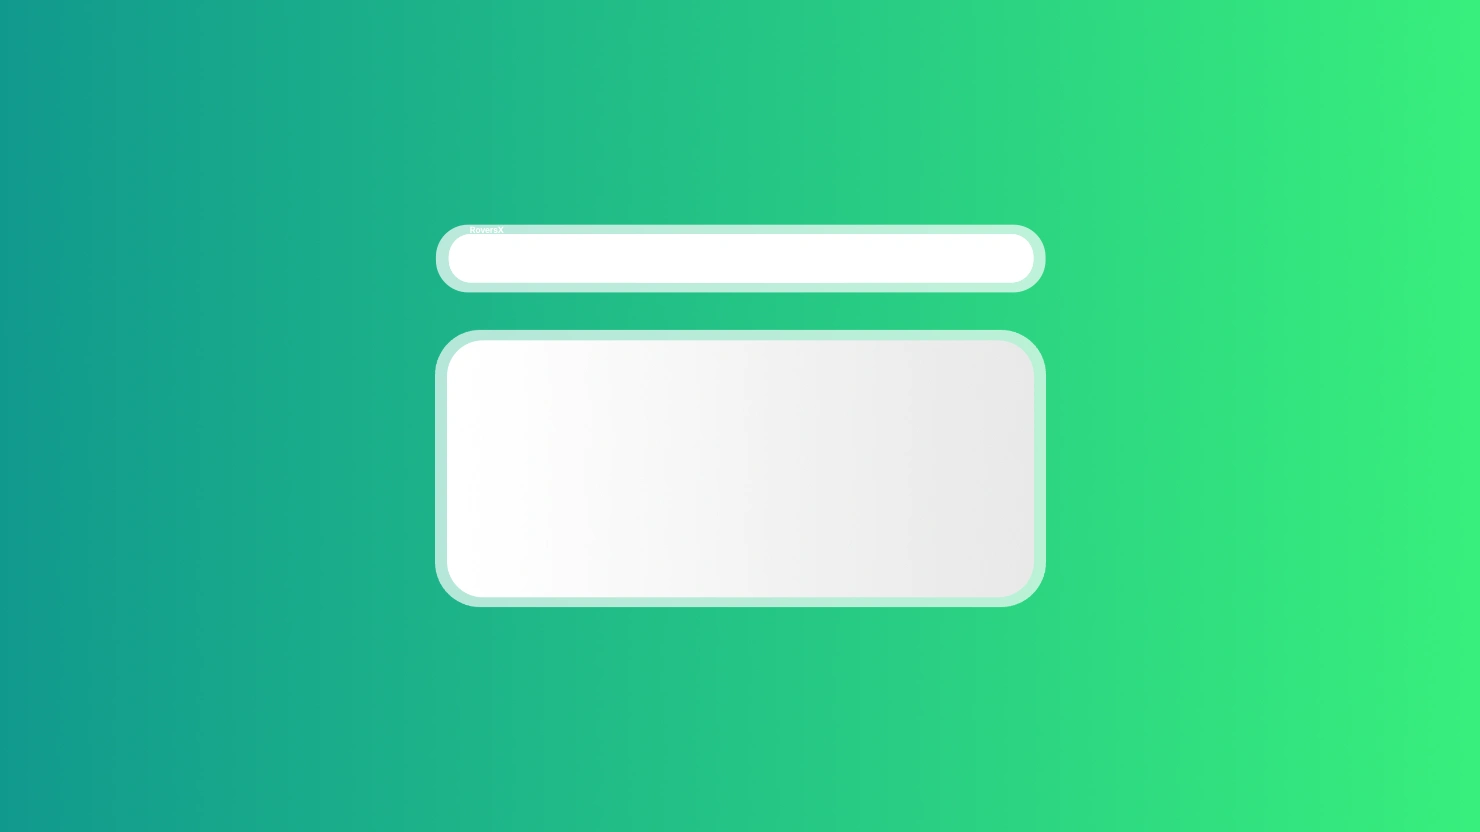 A stylized navigation bar icon.